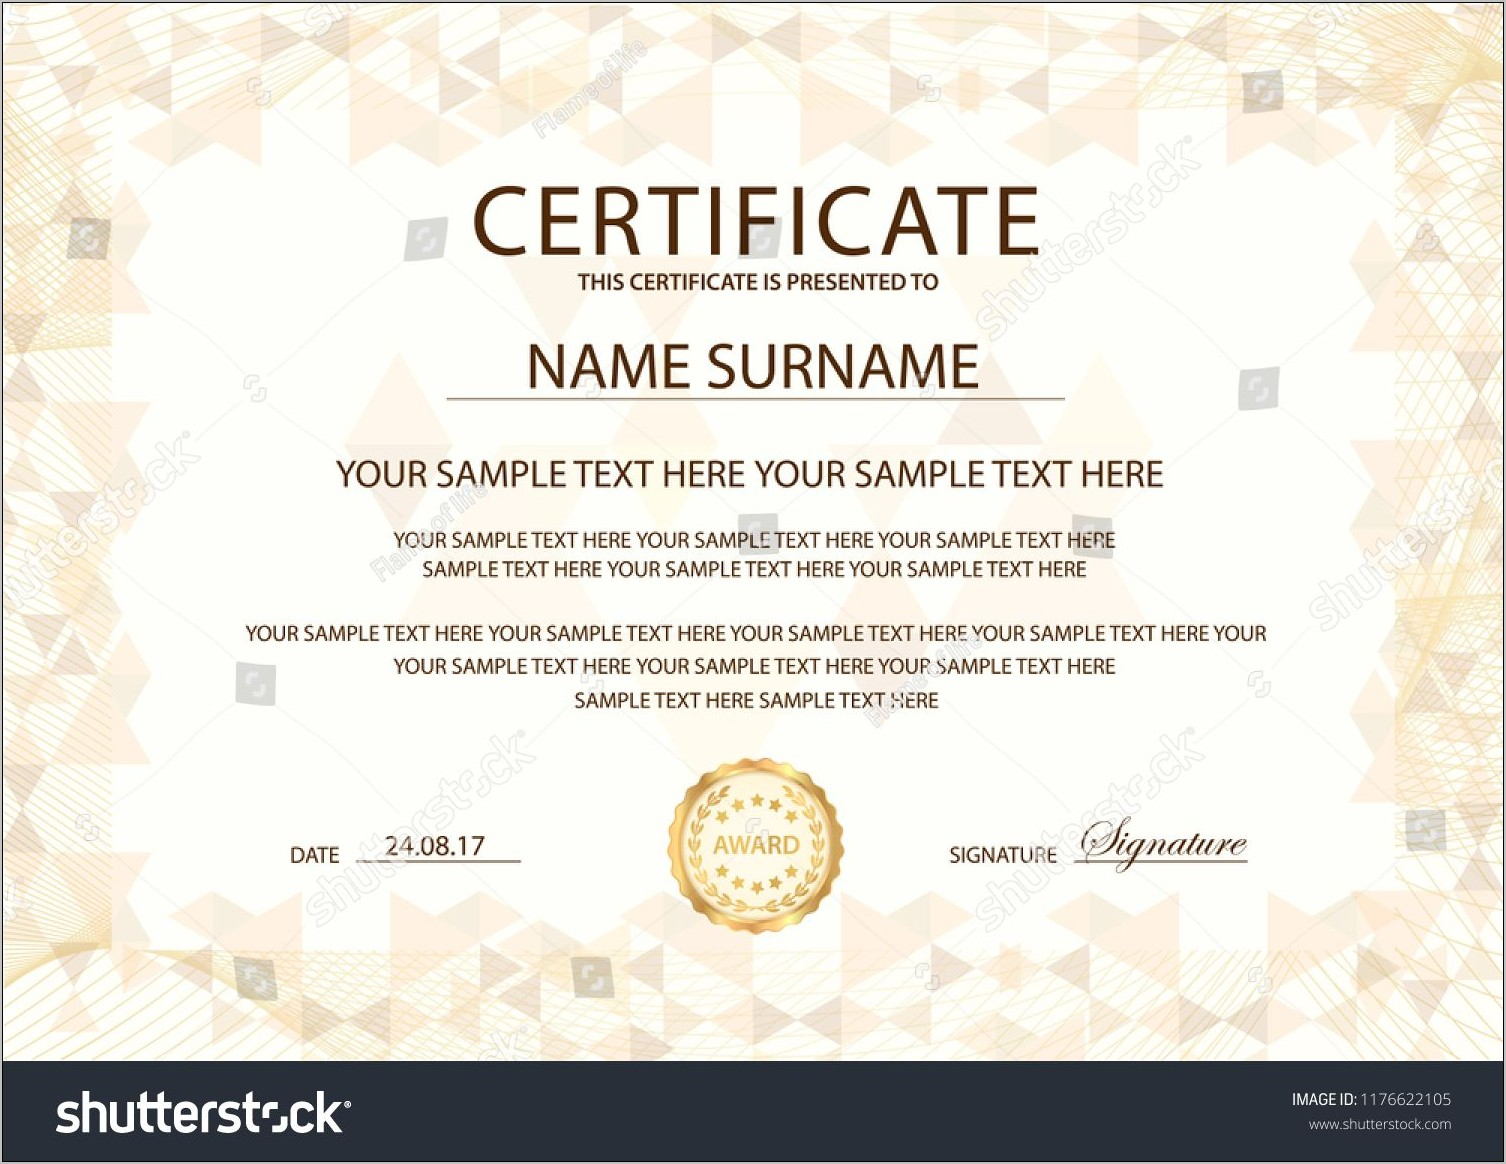 Template Design For Certificate Of Appreciation